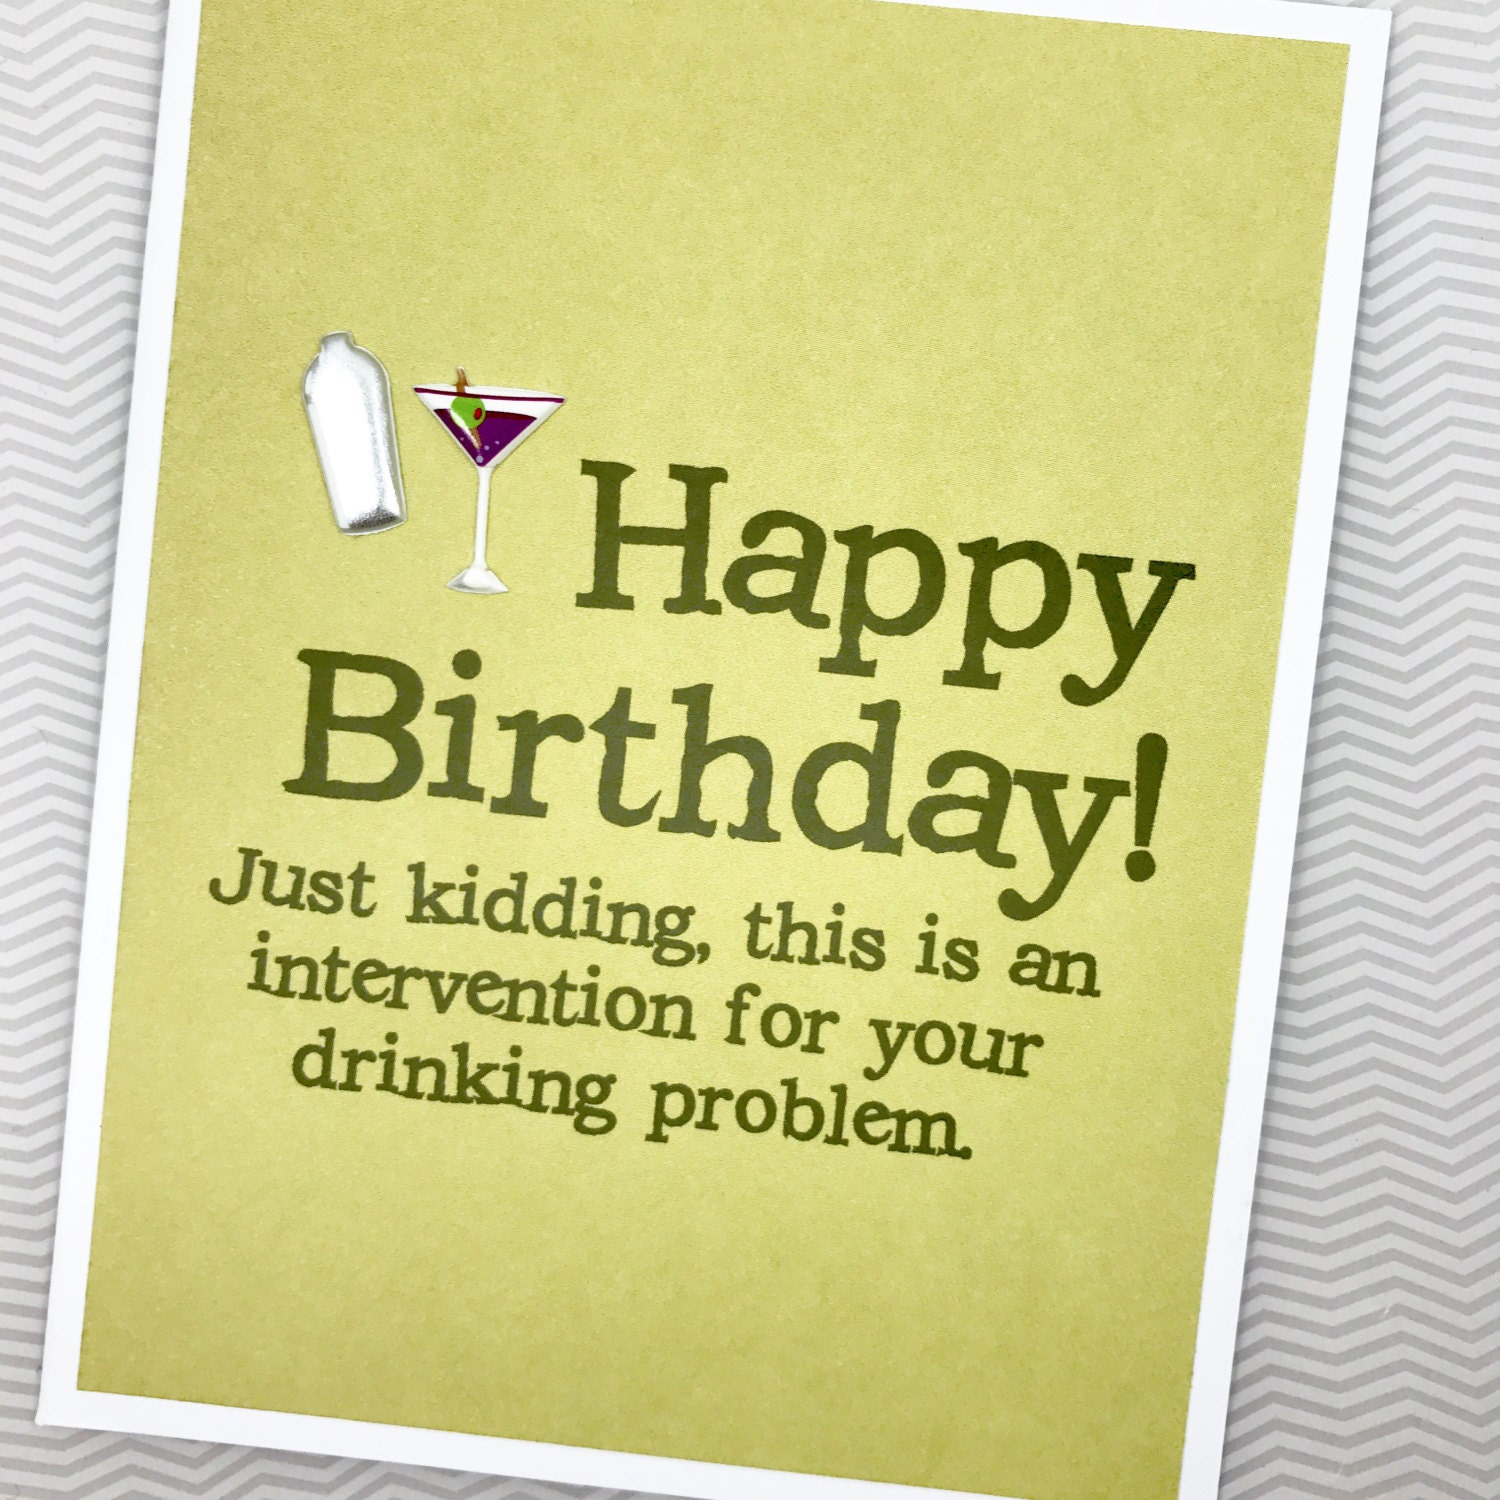 Drinking Intervention Birthday card